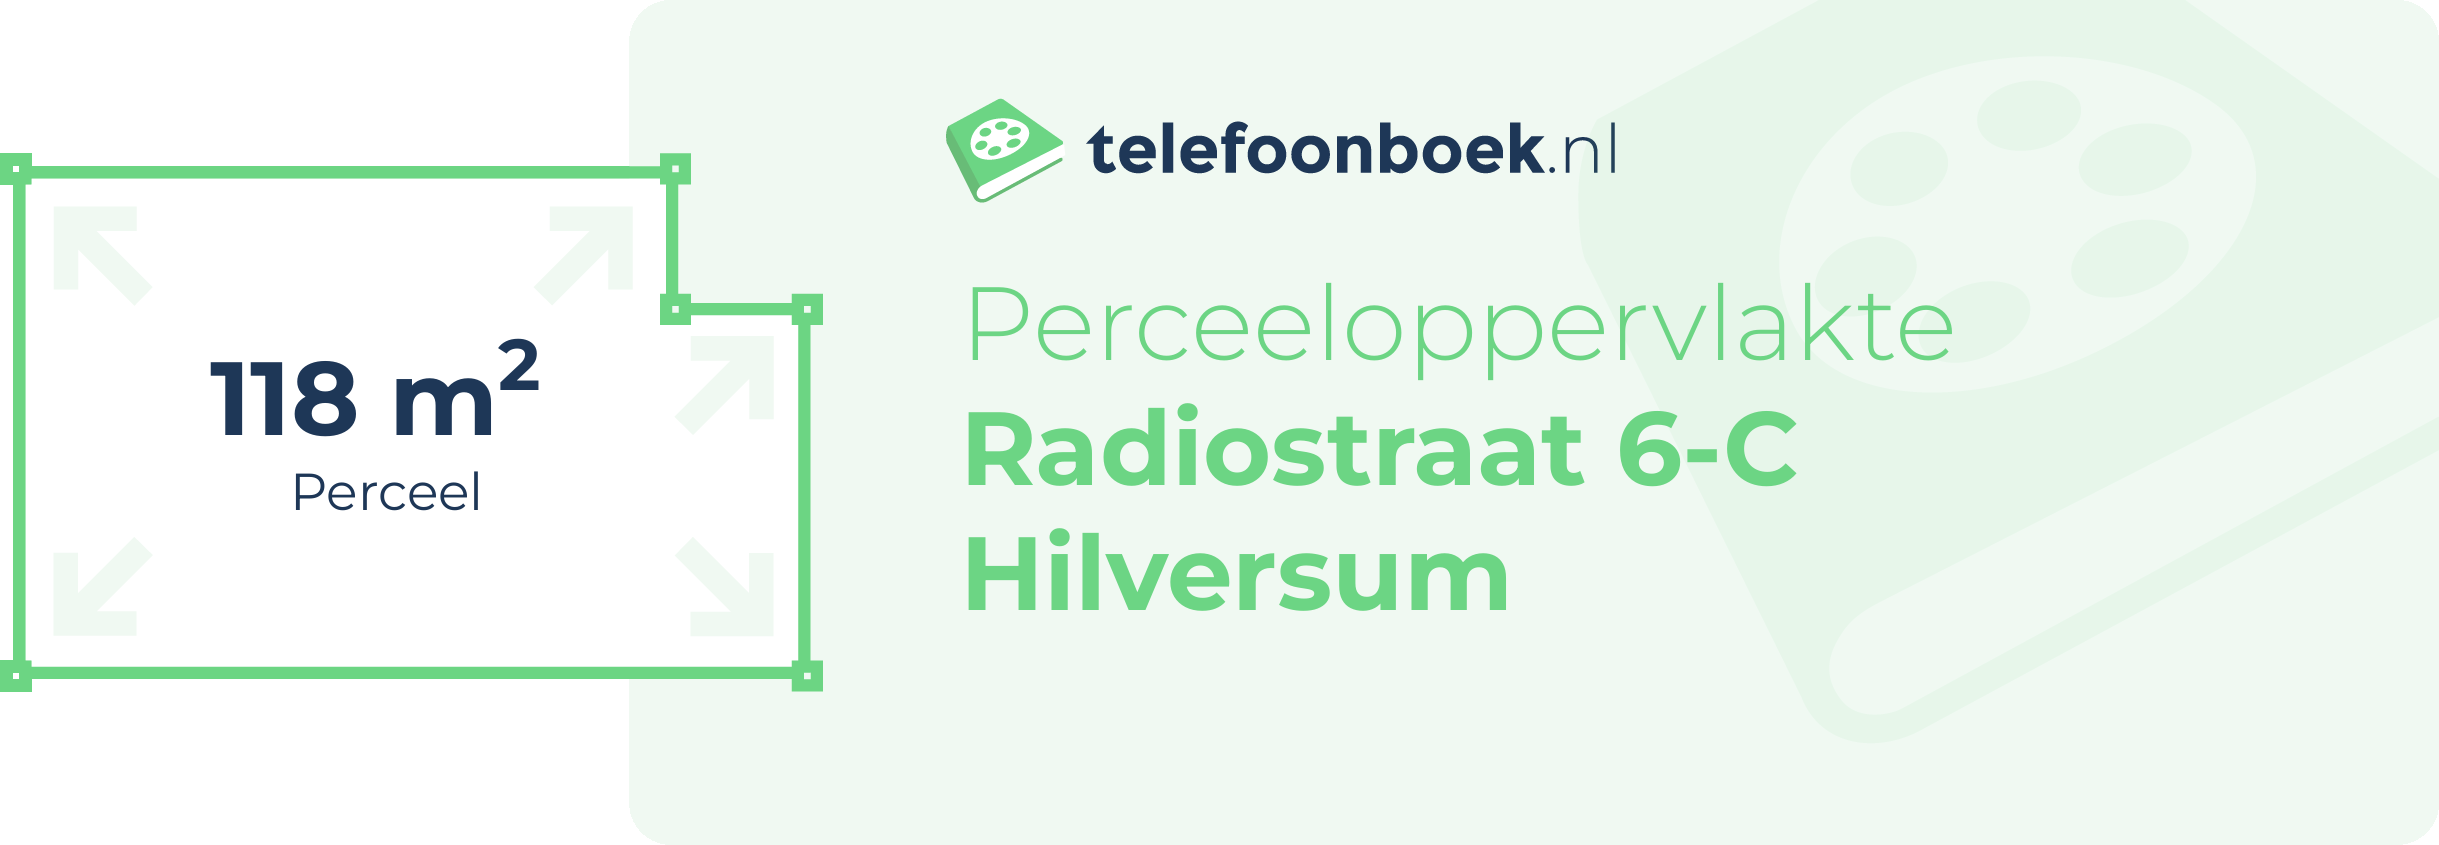 Perceeloppervlakte Radiostraat 6-C Hilversum